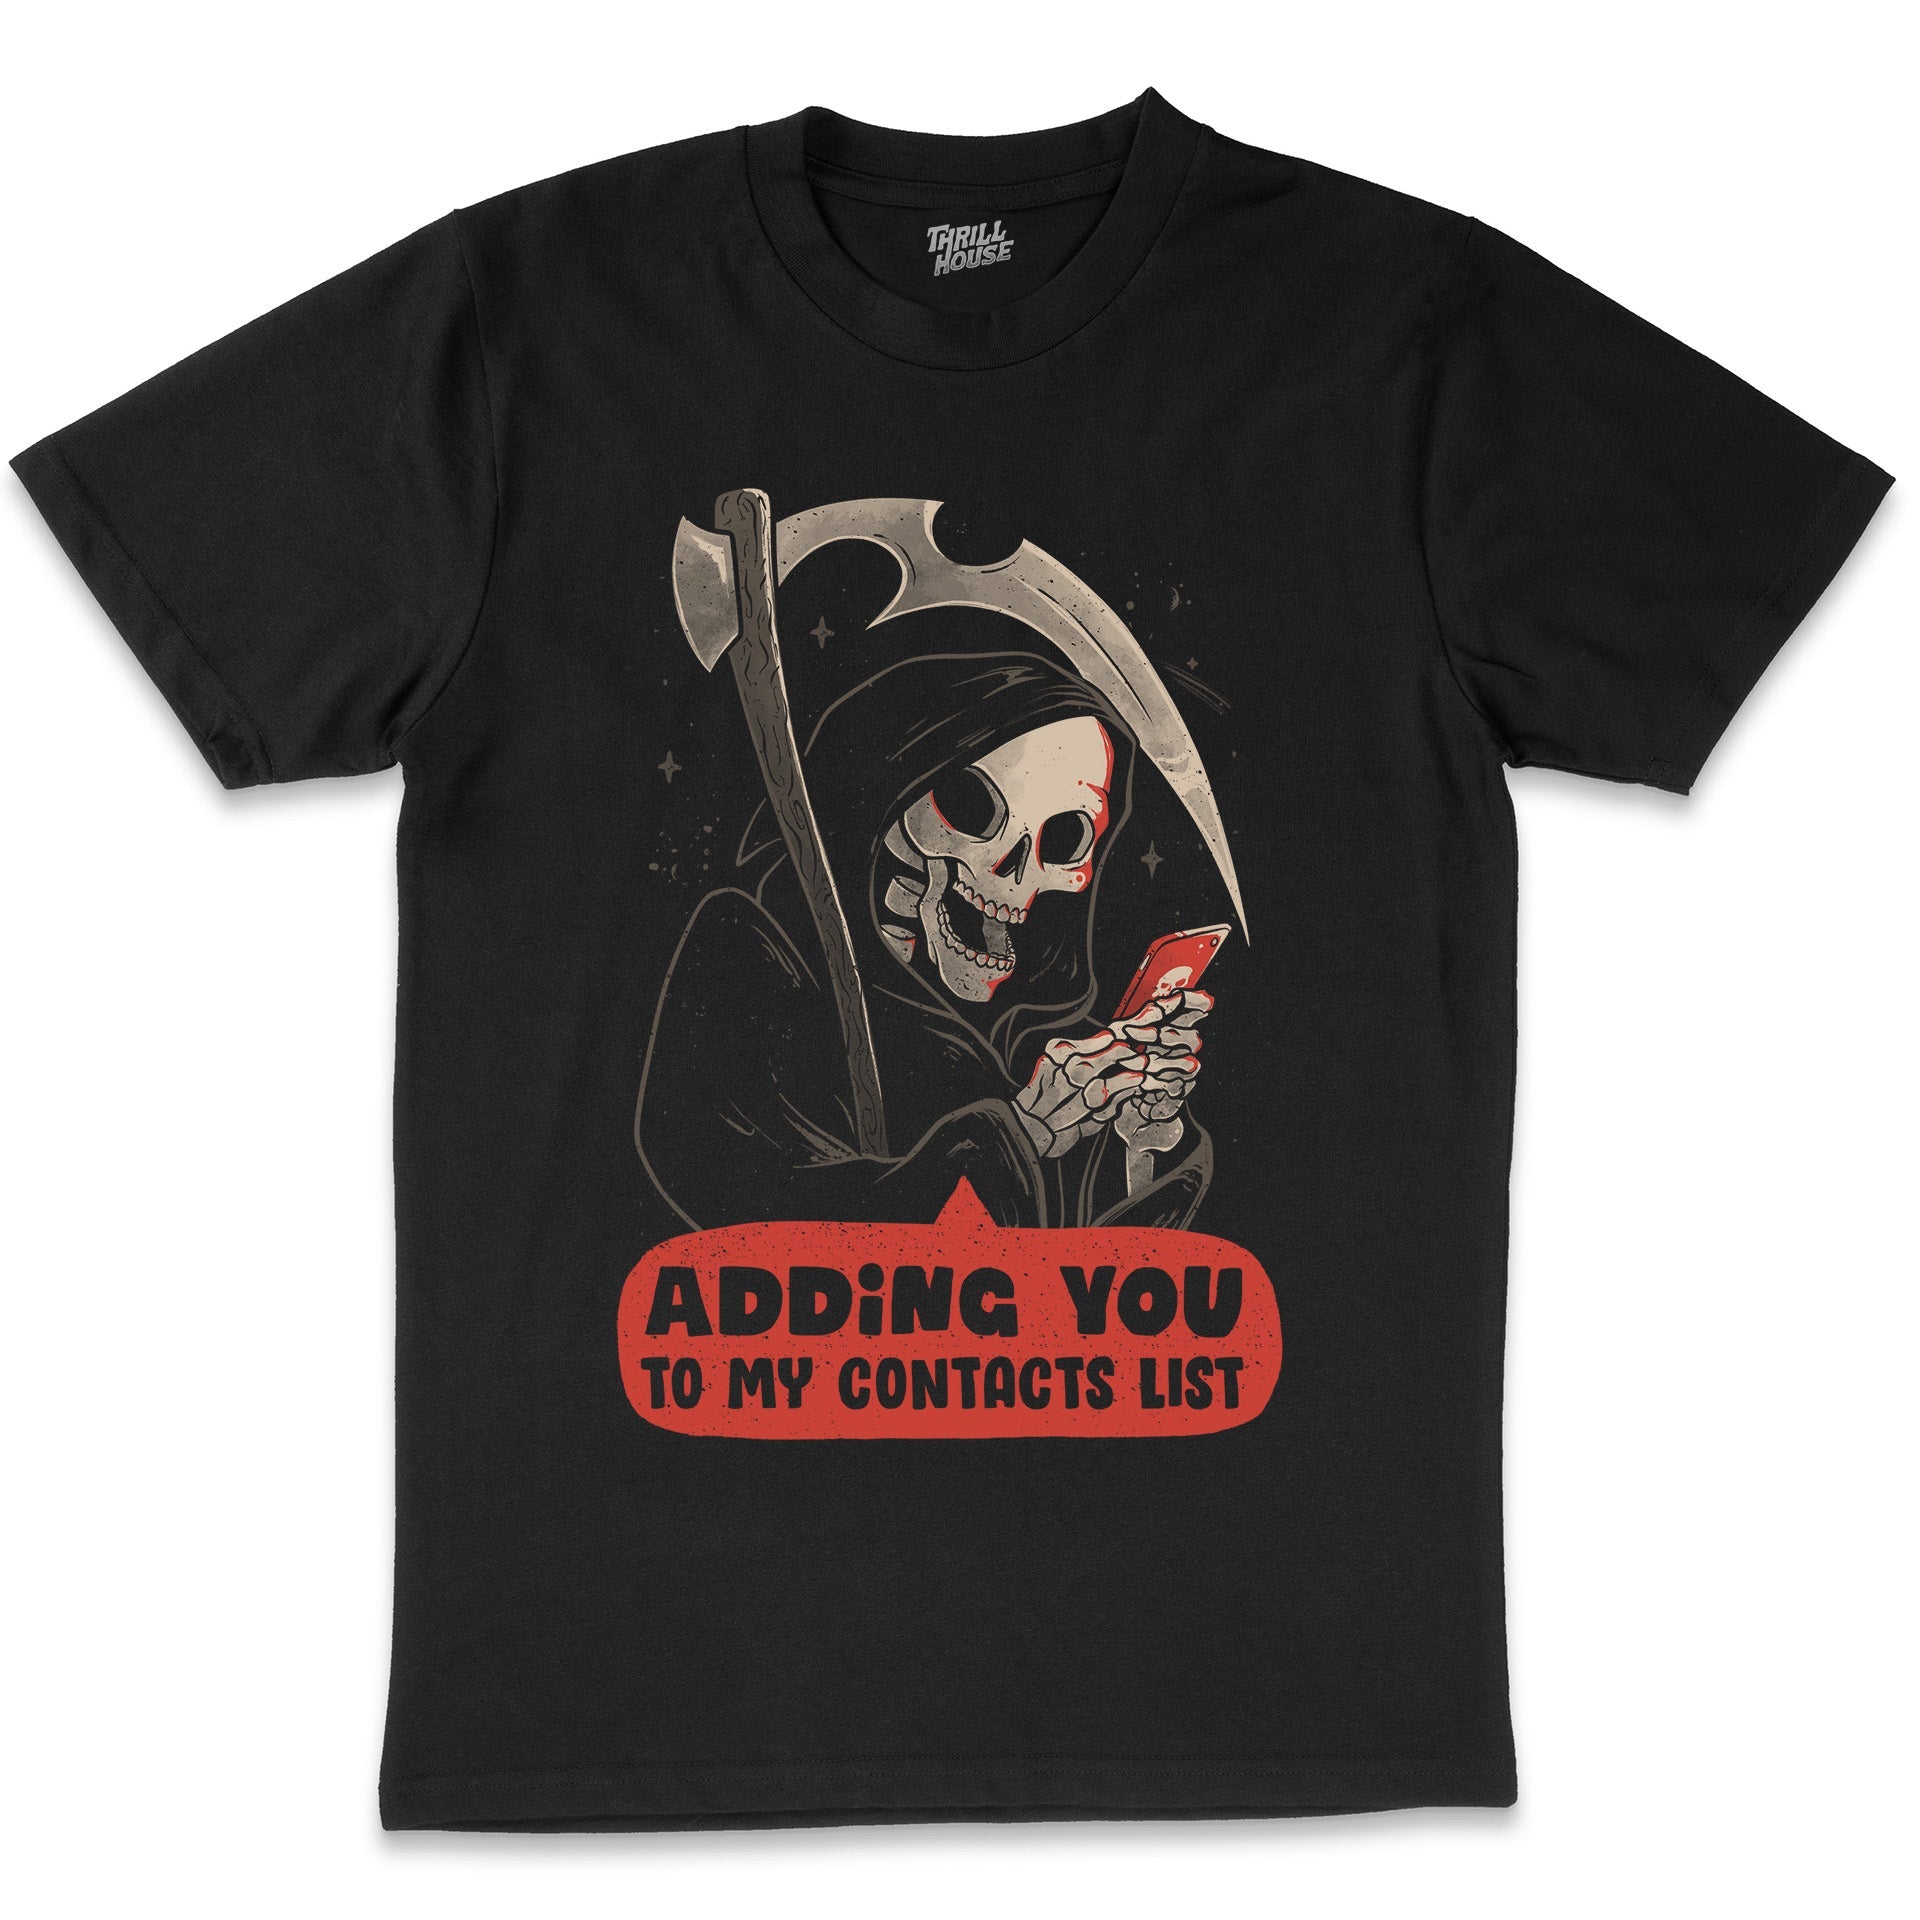 Adding You Funny Grim Reaper Social Media Death Parody Dark Humour Cotton T-Shirt